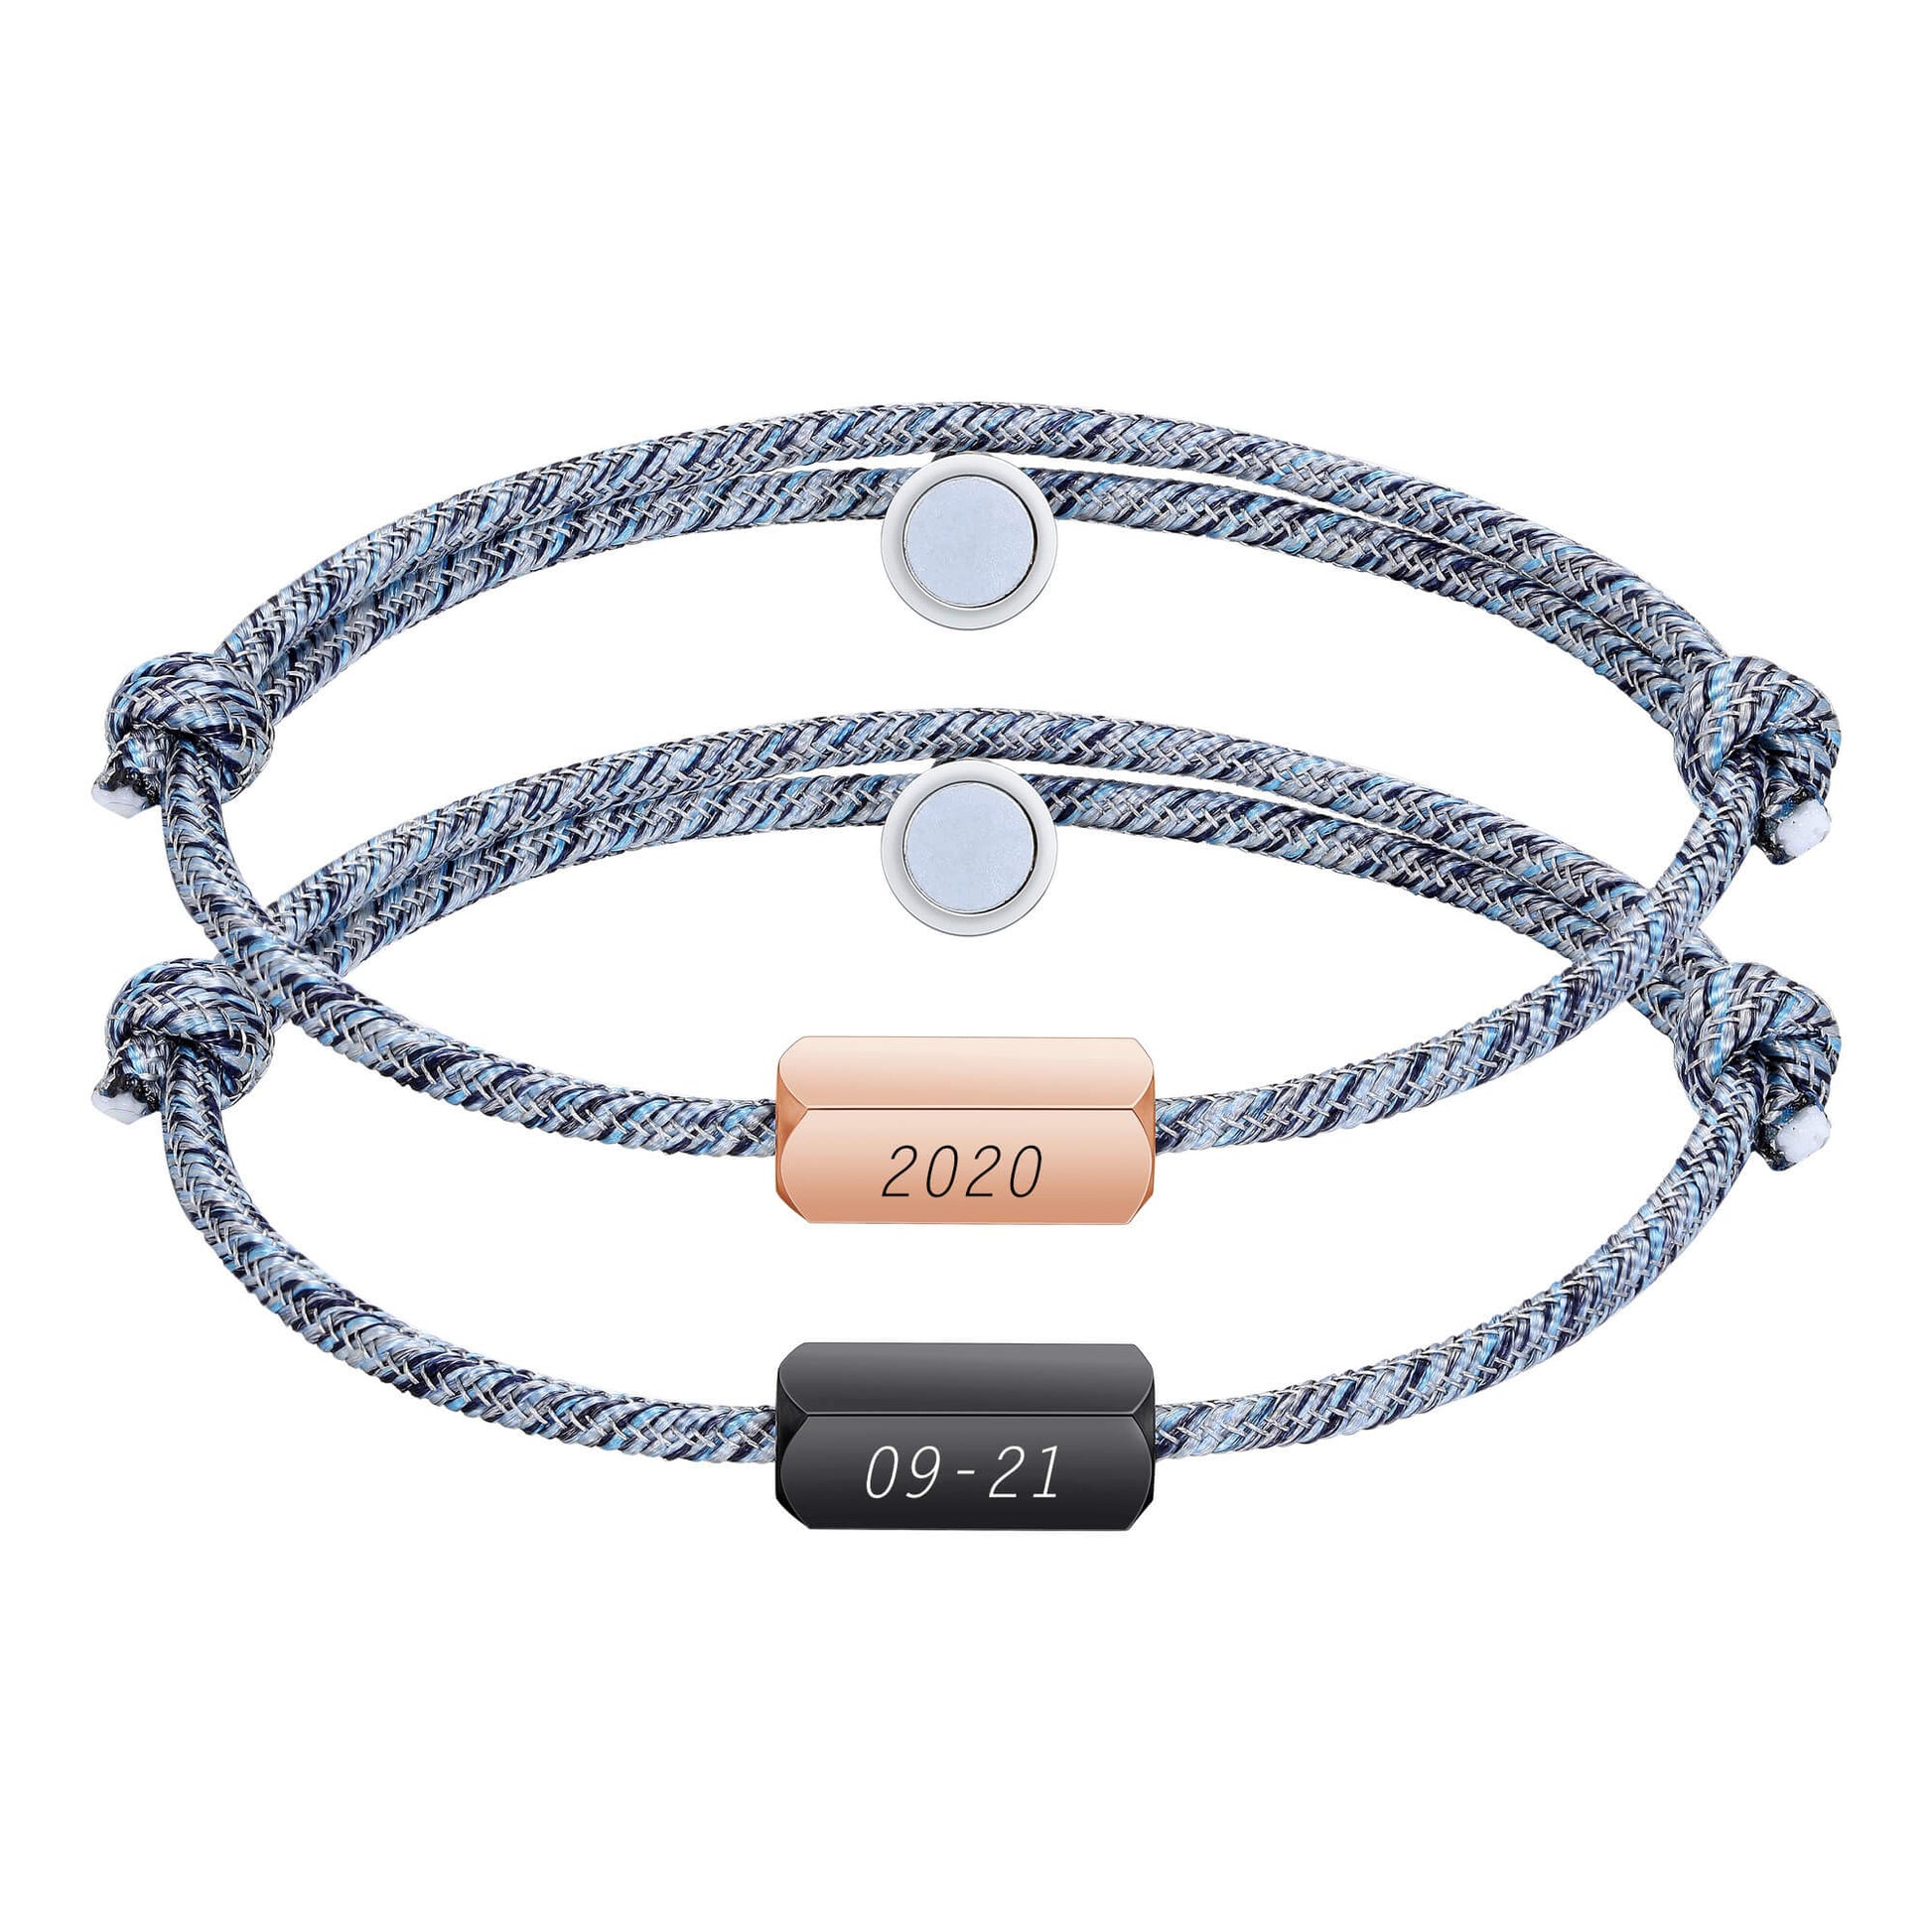 Custom Coordinates Bracelet, Long Distance Relationship Bracelet